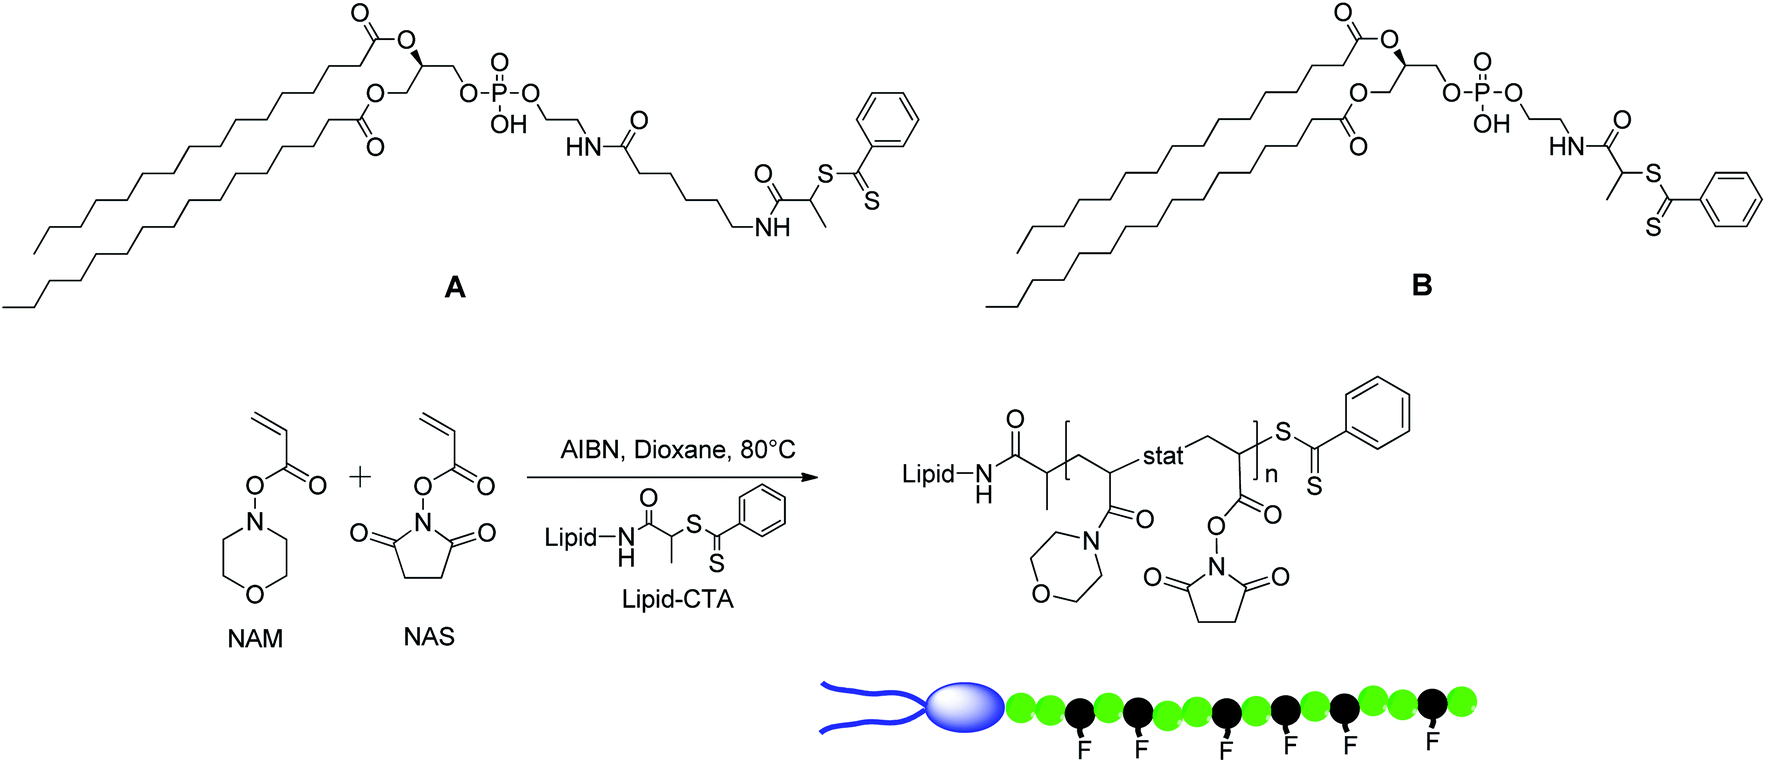 lipids polymer